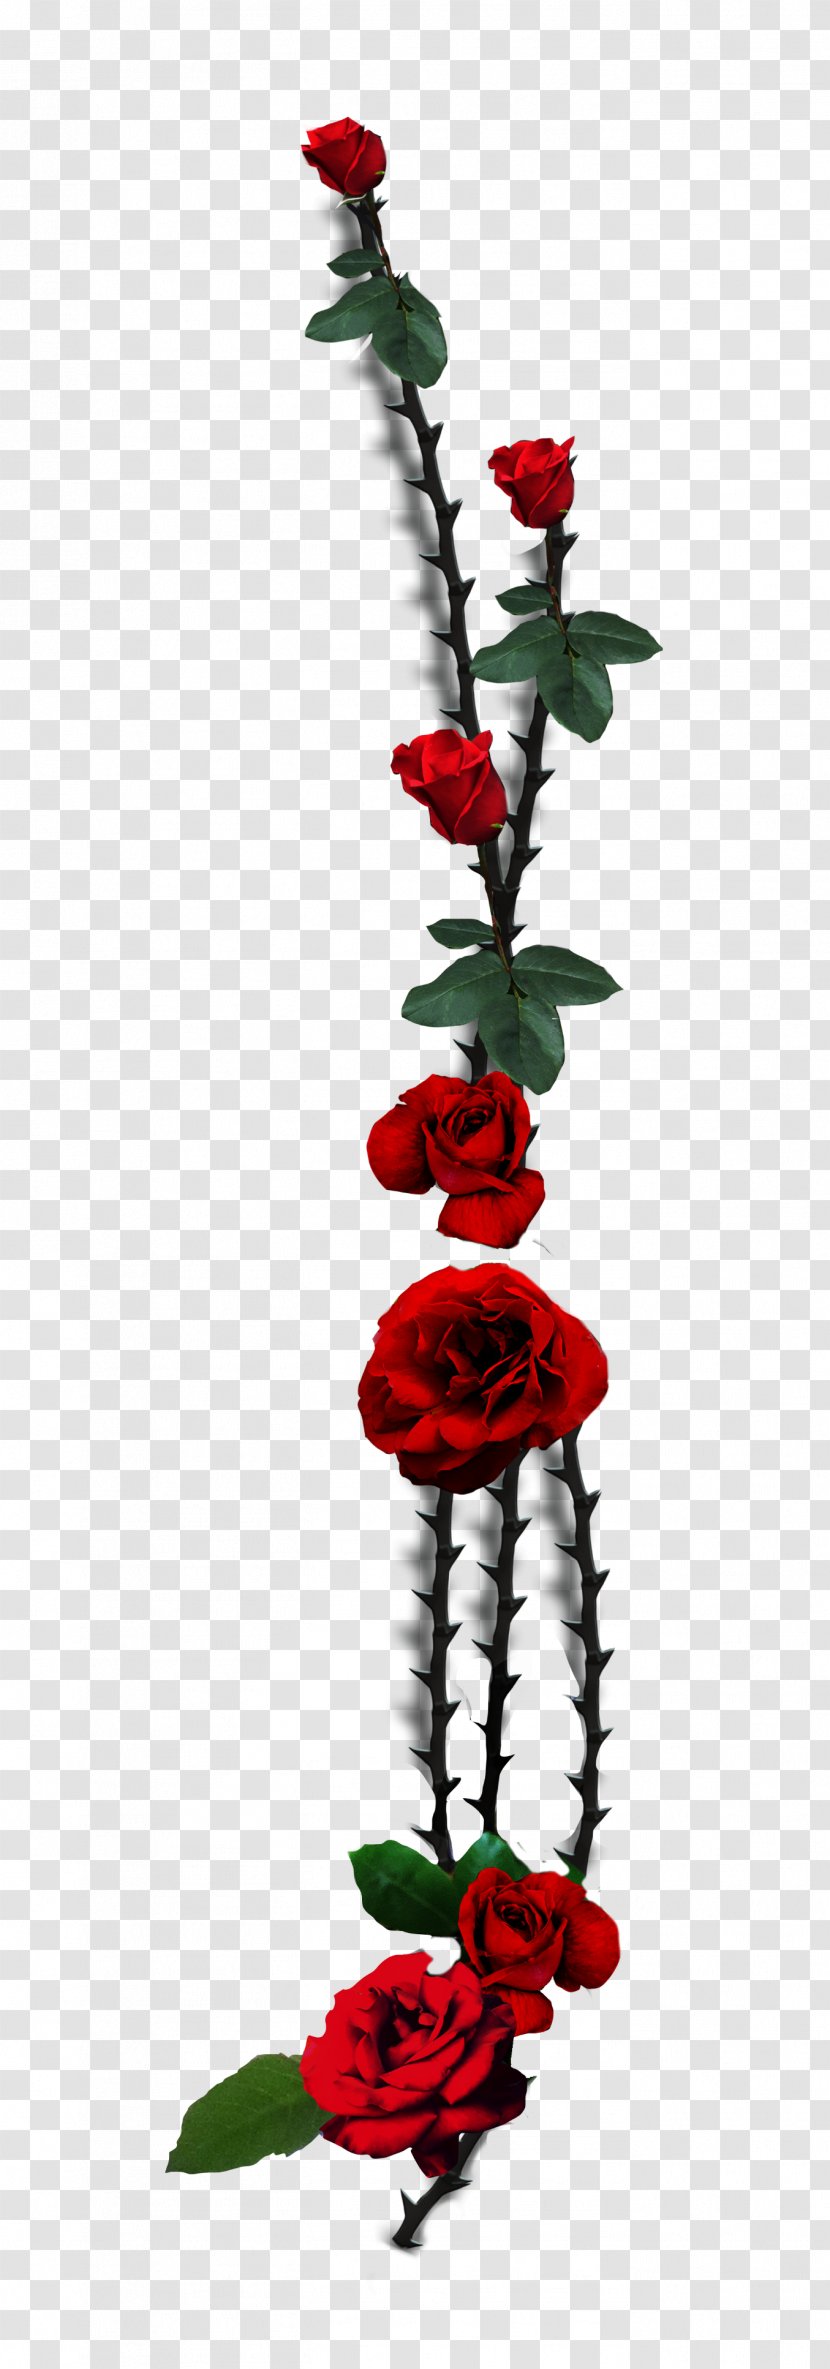 Garden Roses Thorns, Spines, And Prickles Flower Floral Design - Rose Family Transparent PNG